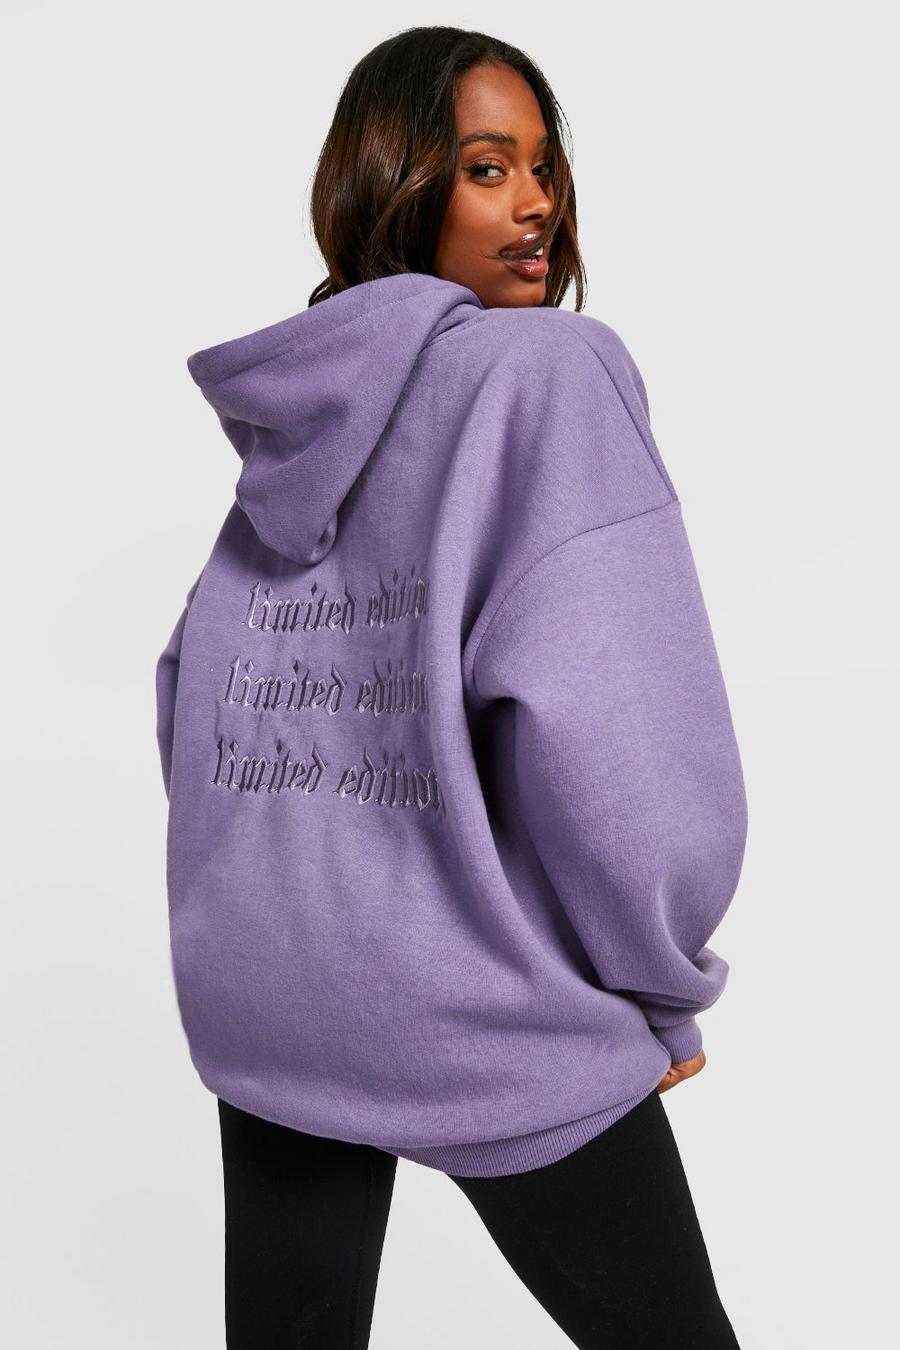 https://media.boohoo.com/i/boohoo/gzz28917_purple_xl/female-purple-3d-embroidered-oversized-hoodie/?w=900&qlt=default&fmt.jp2.qlt=70&fmt=auto&sm=fit